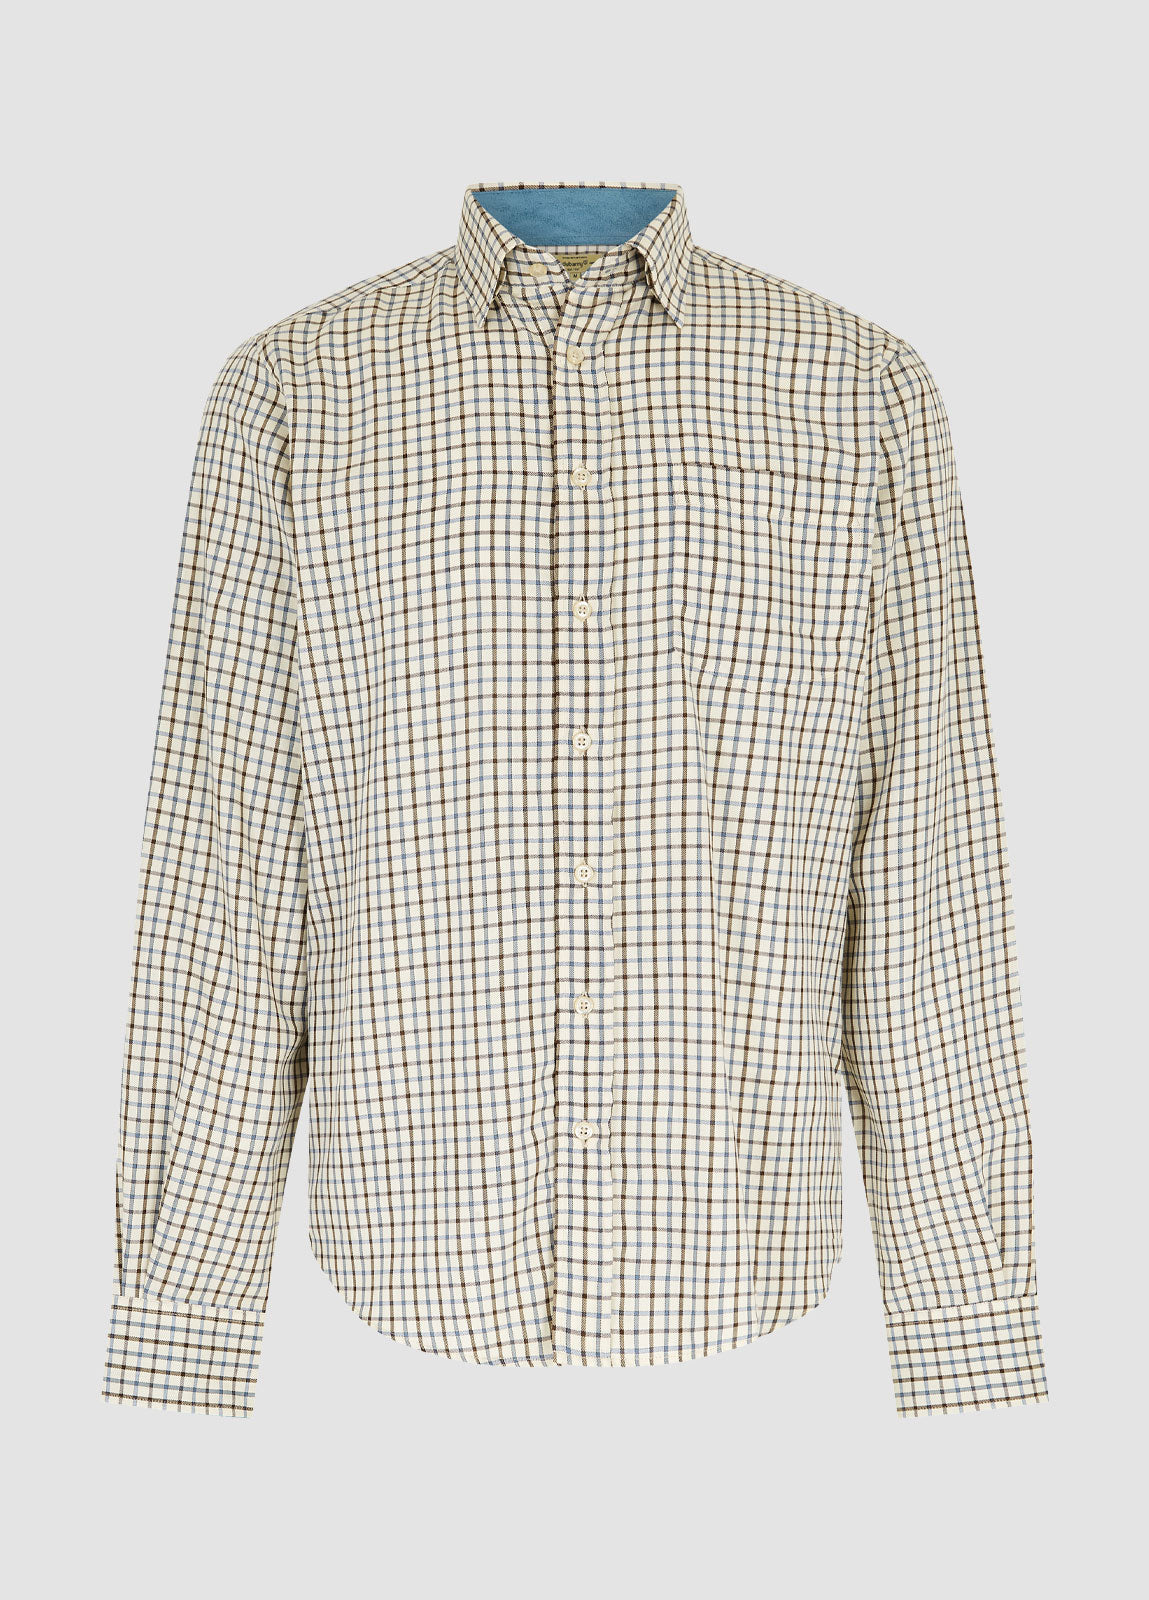 Connell Men's Button Up Shirt